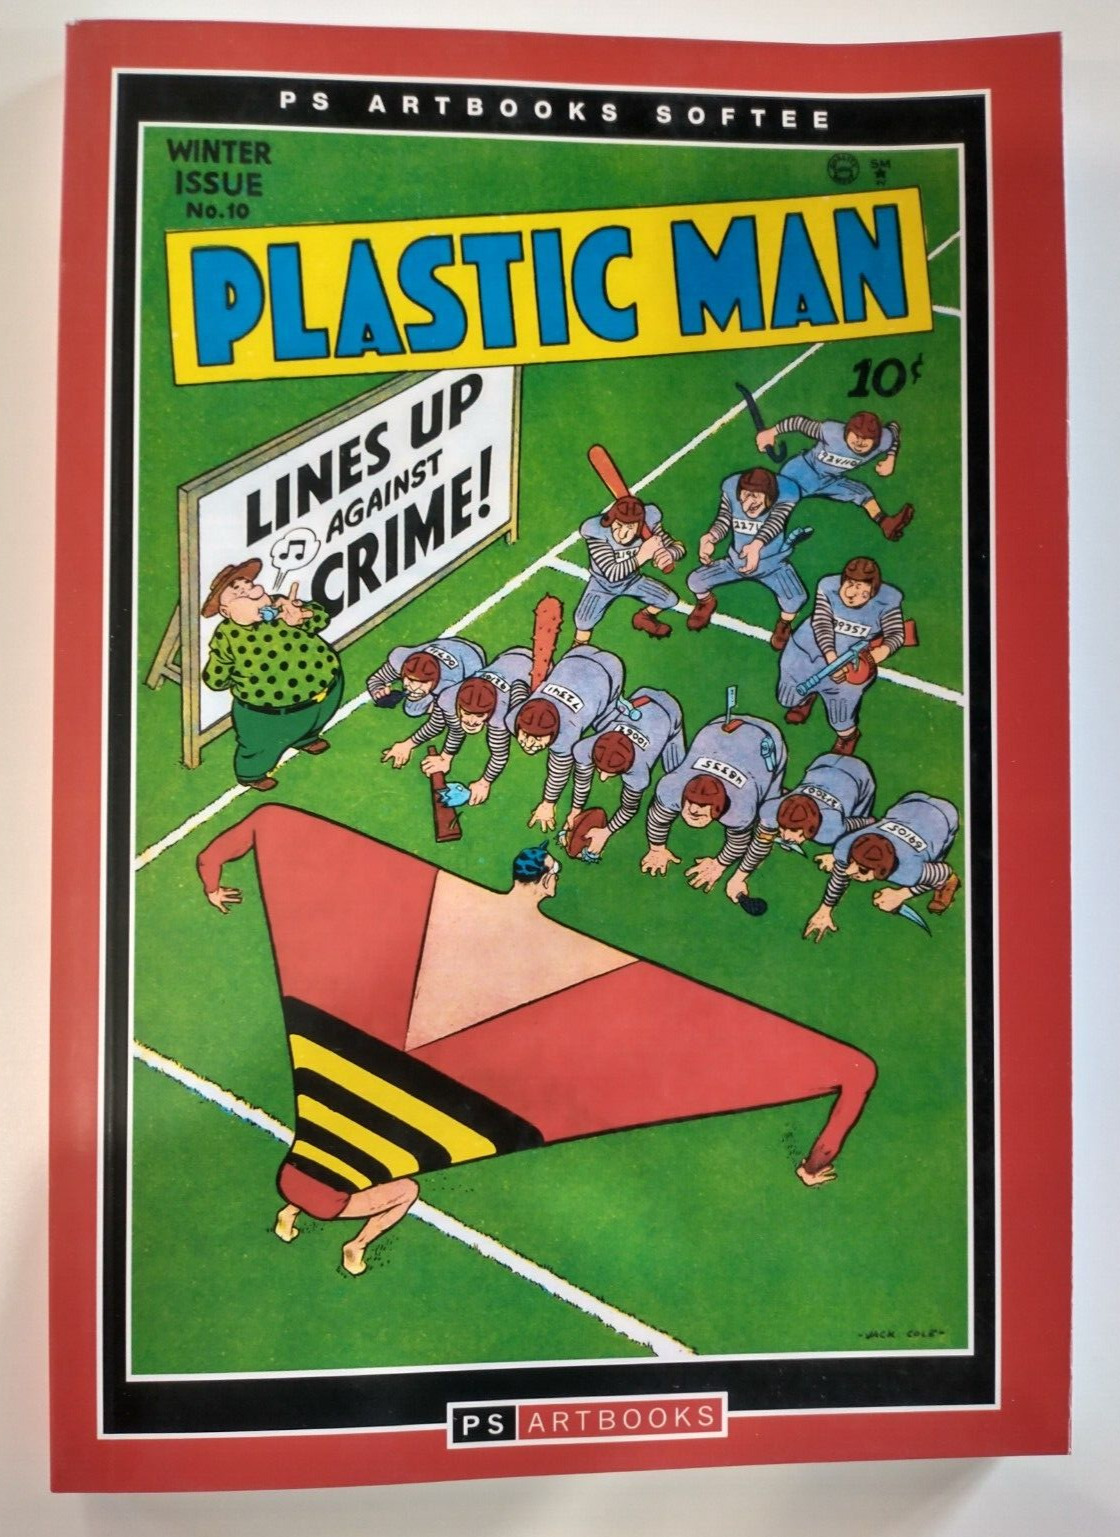 Plastic Man Volume 3 PS Artbooks Softee TPB